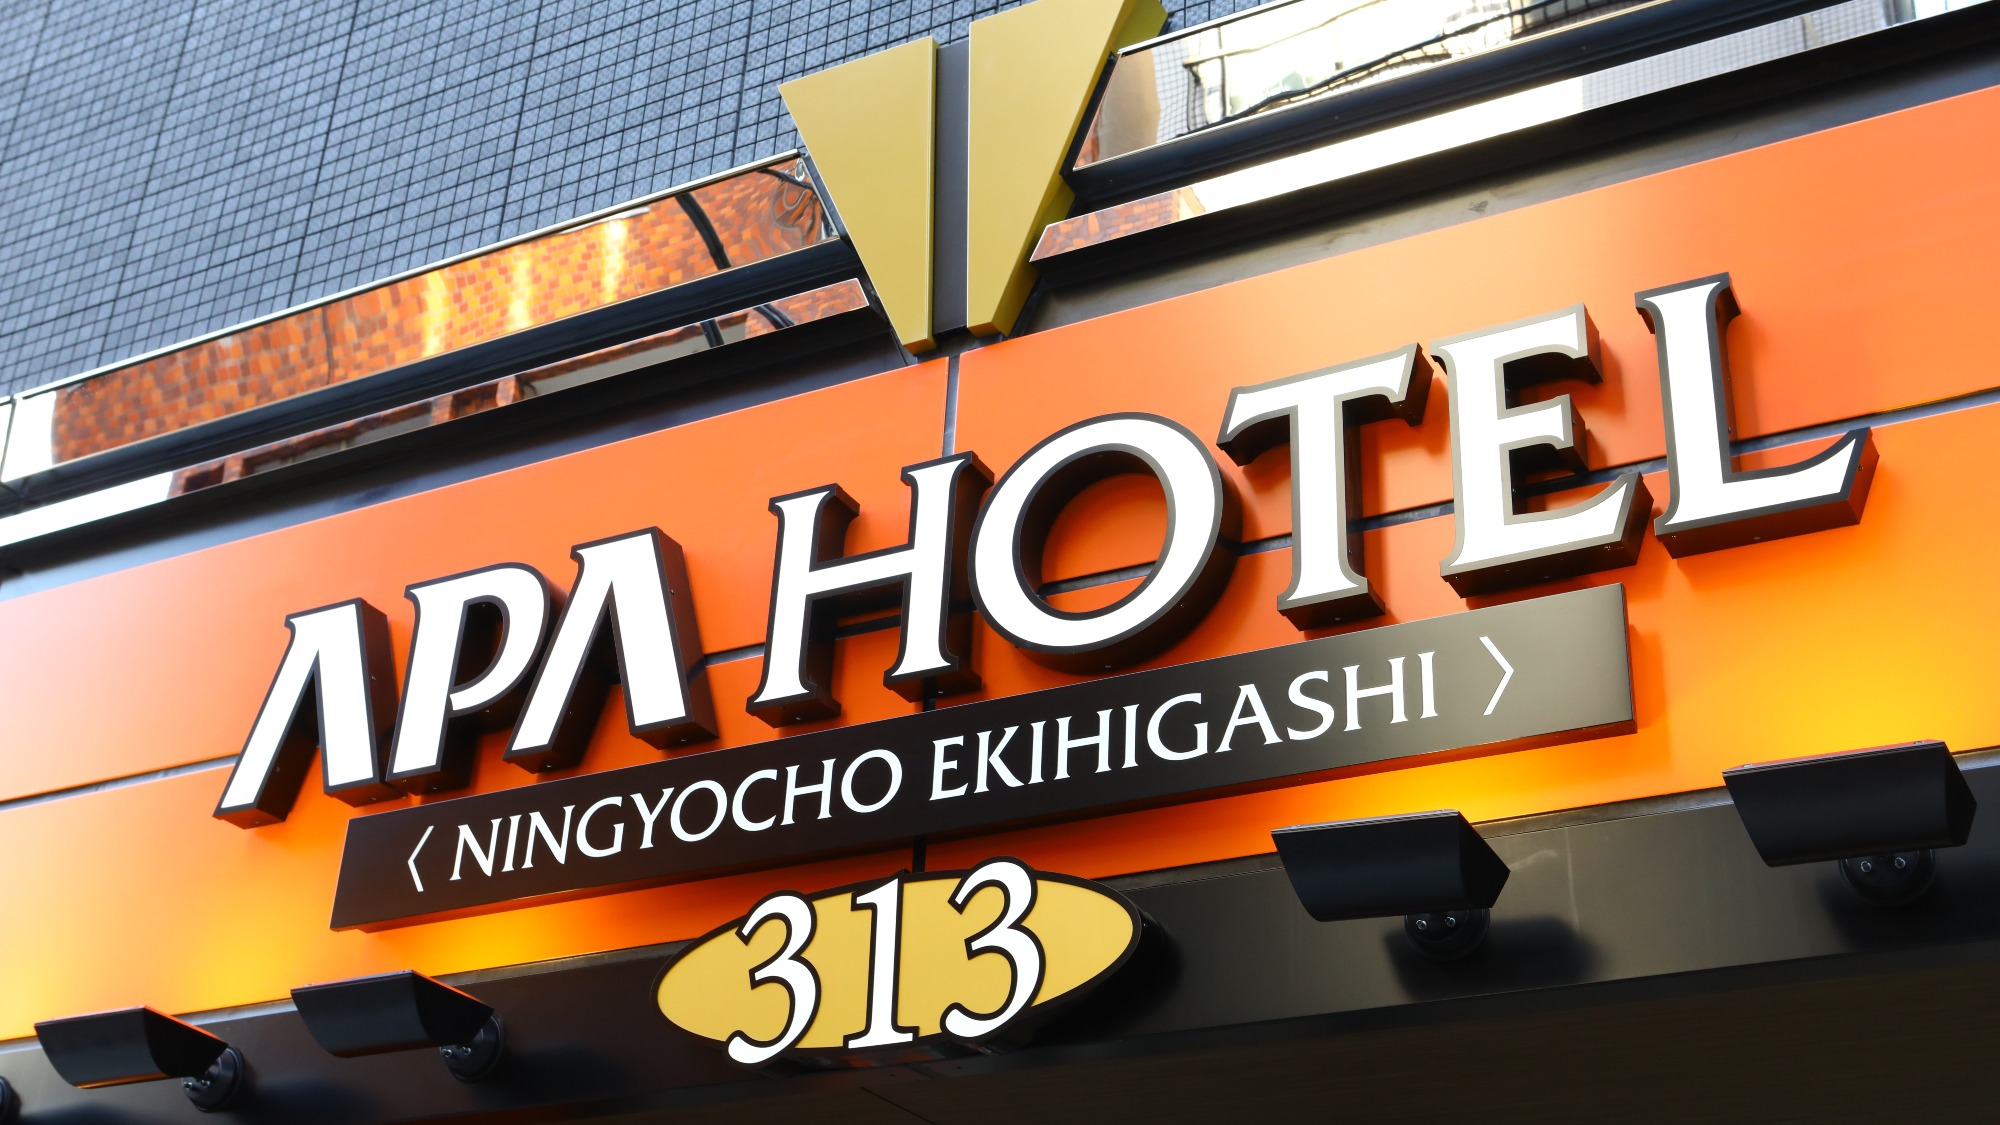 APA Hotel Ningyocho Ekihigashi